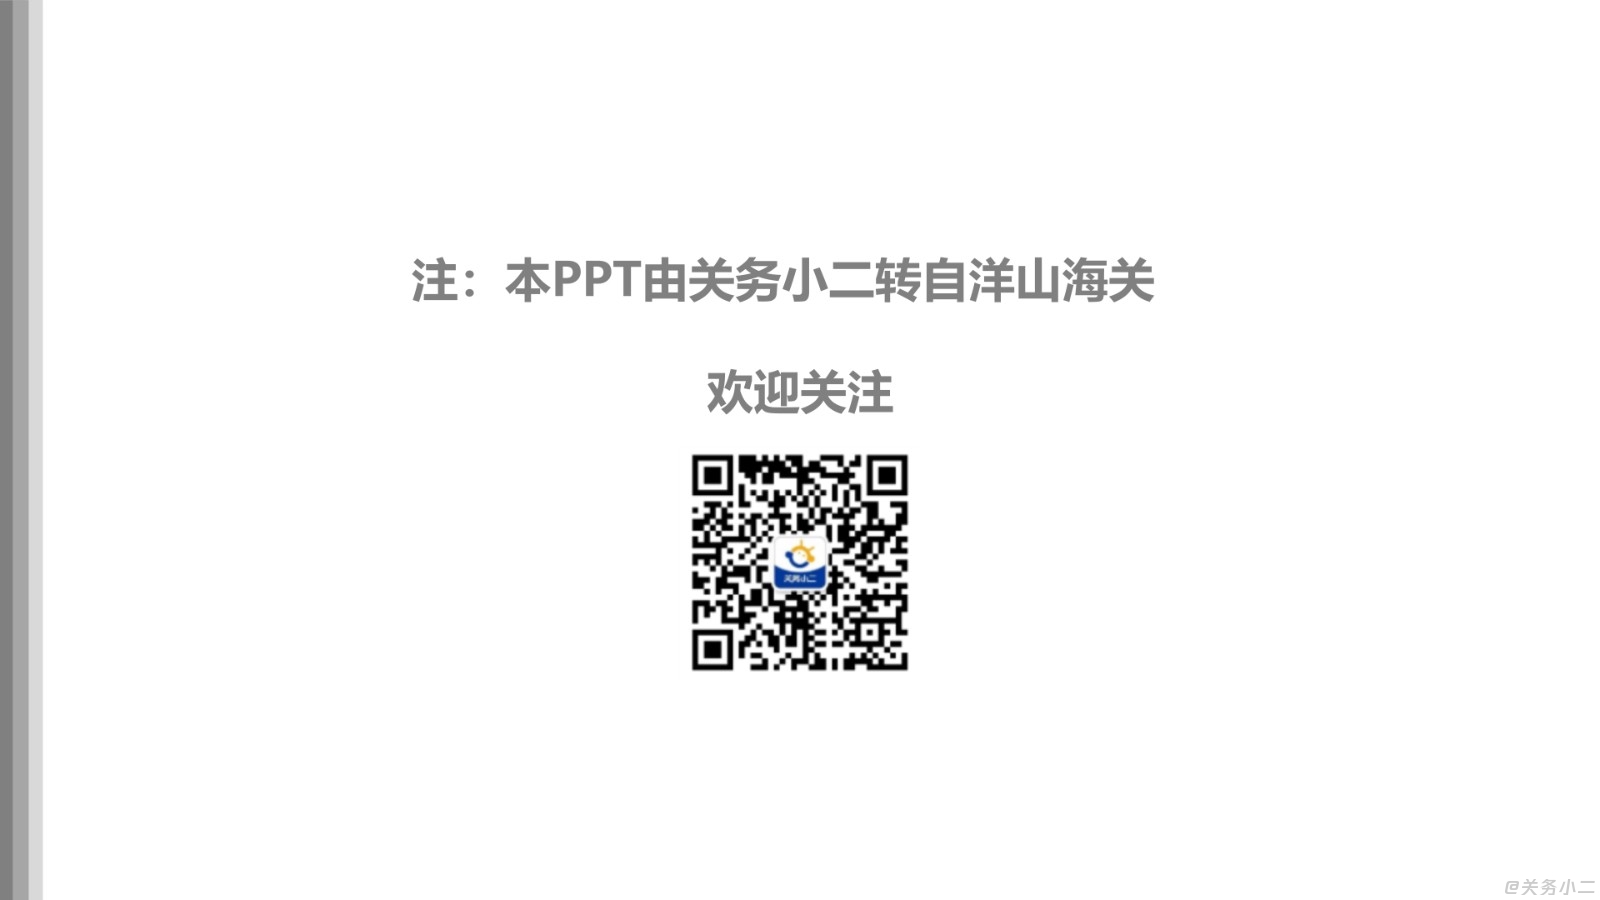 PPT-上海海关海运出口放行信息切换安排宣贯会_15.jpg